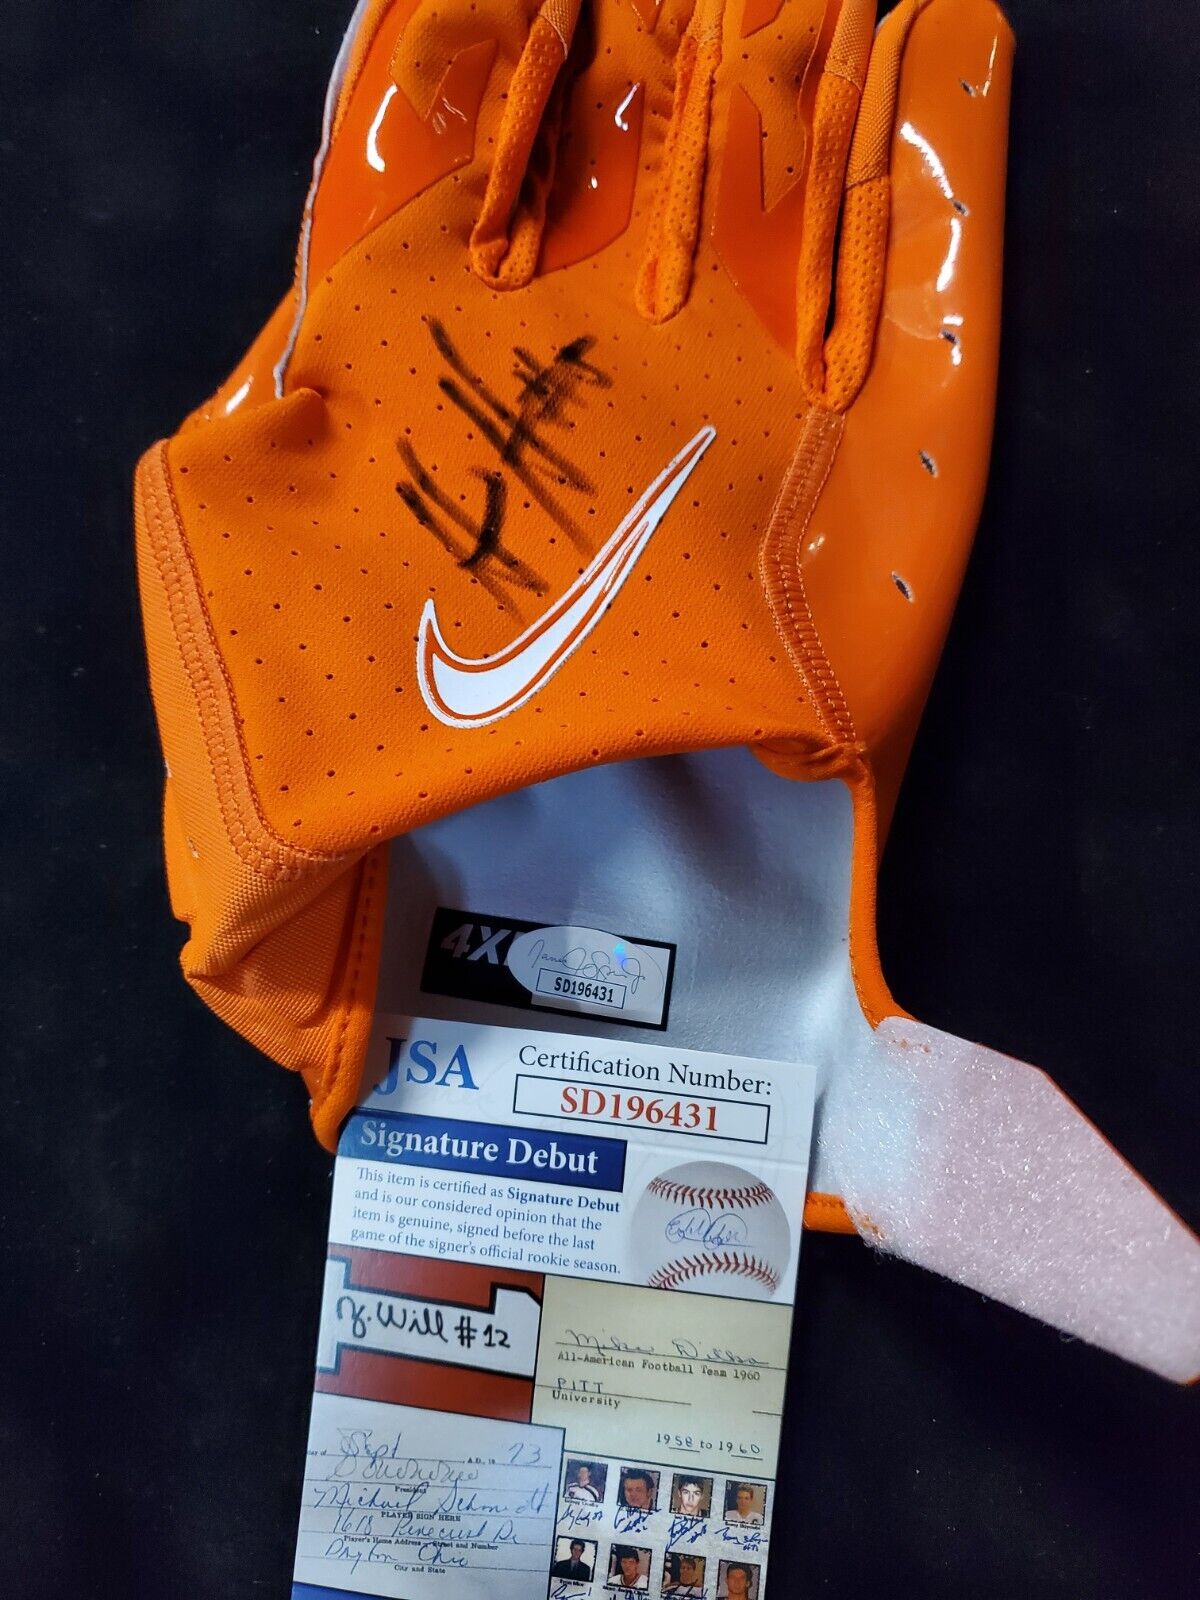 MVP Authentics Tennessee Volunteers Hendon Hooker Autographed Signed Glove Jsa Coa 175.50 sports jersey framing , jersey framing